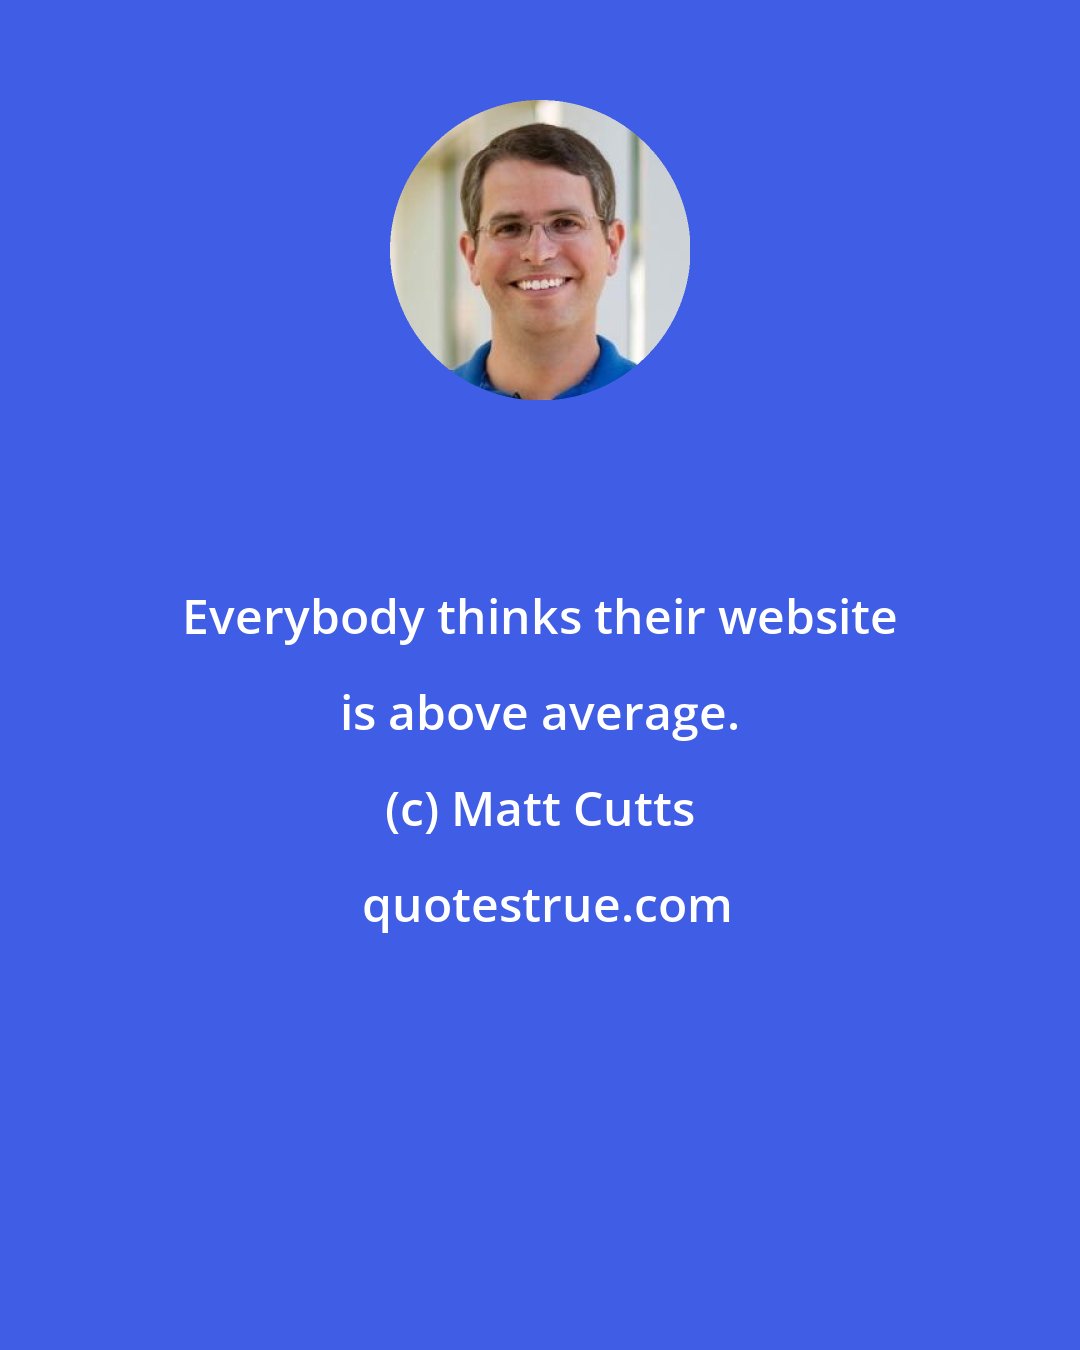 Matt Cutts: Everybody thinks their website is above average.